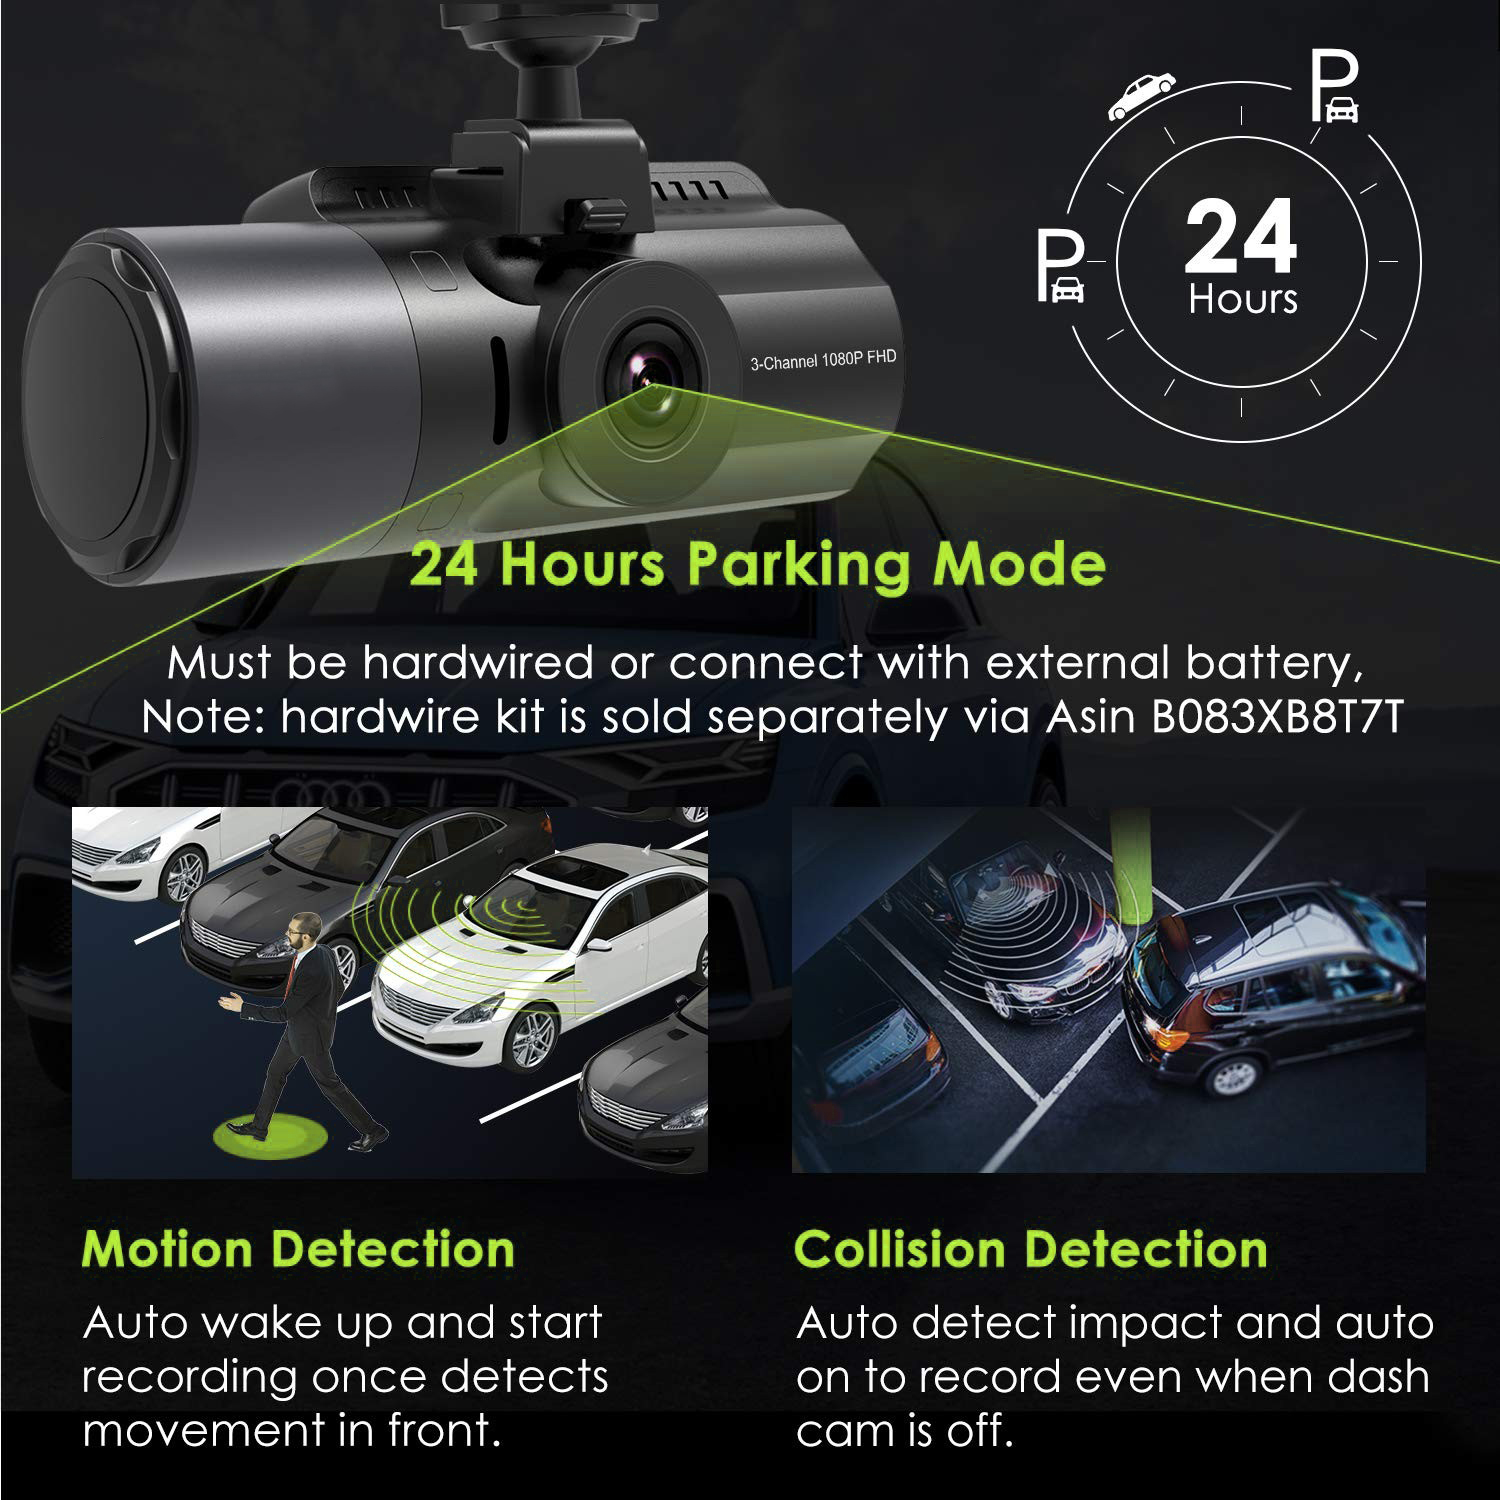 Mode parkir kamera mobil Profio S12